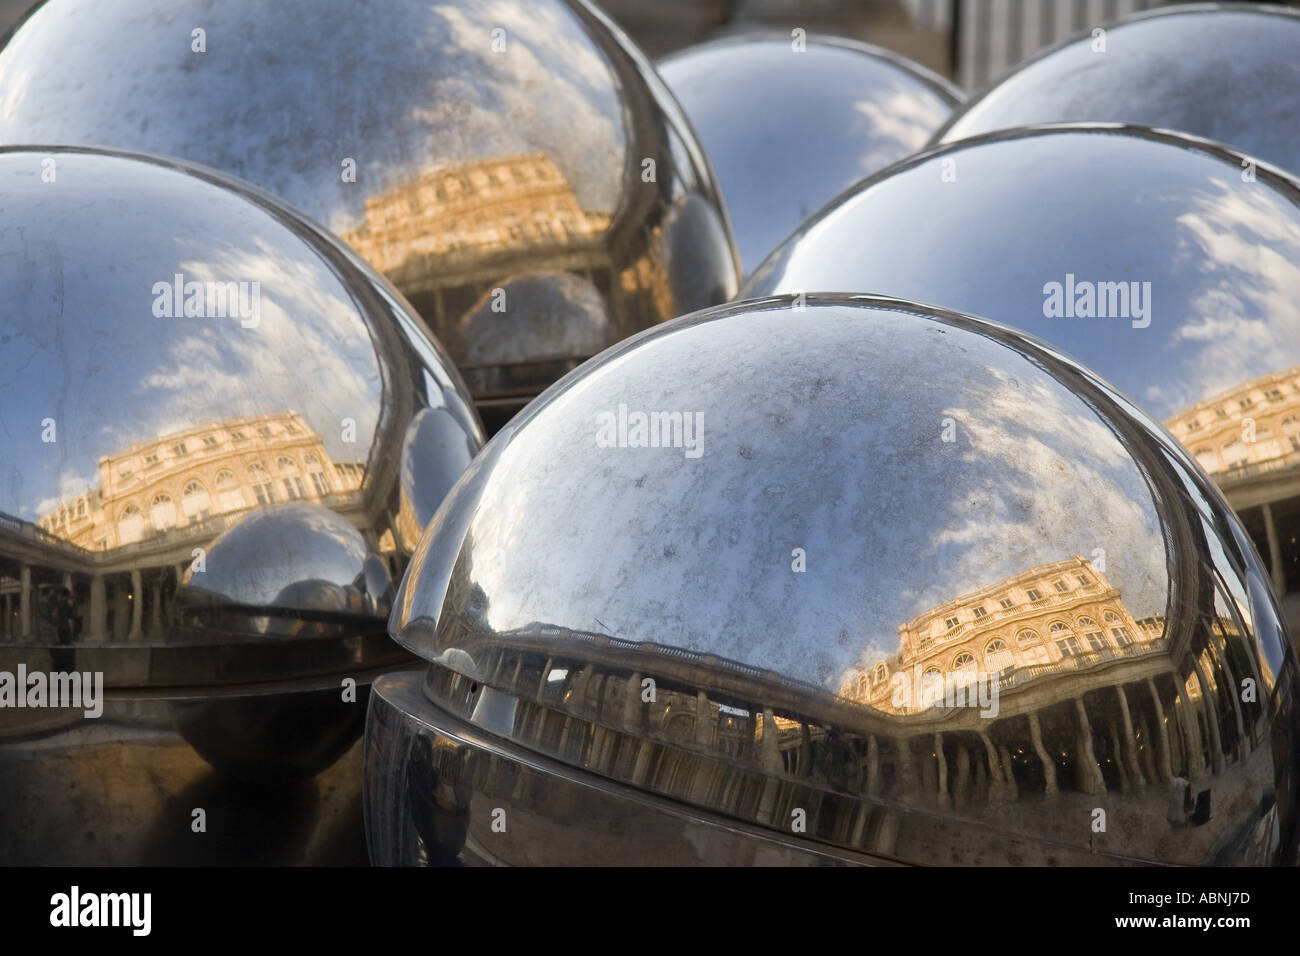 Shiny chrome silver spheres reflect the facade of the Palais Royal Paris France Stock Photo